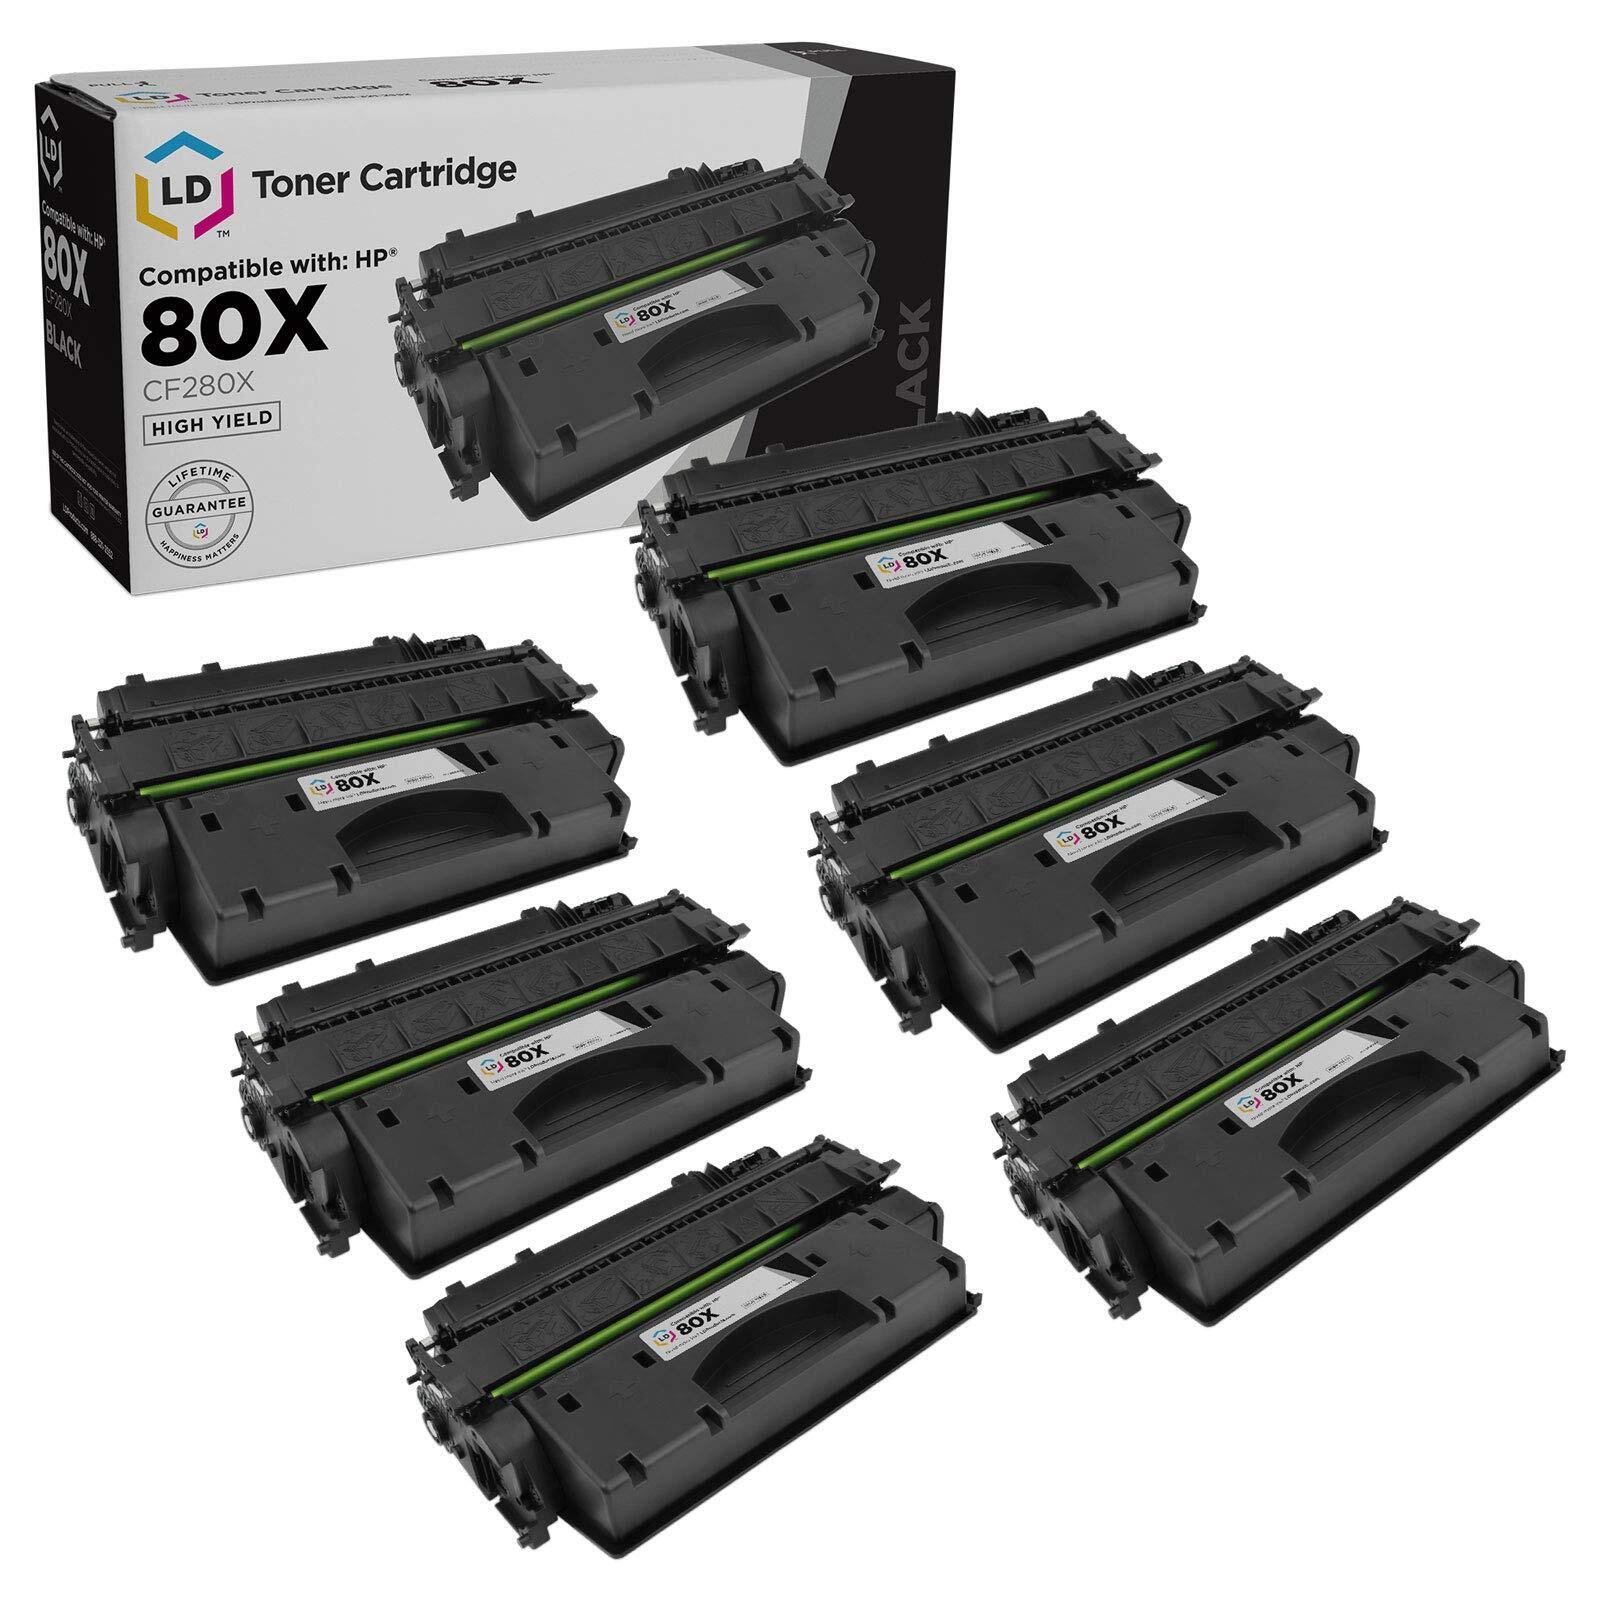 LD 6PK CF280X 80X Black High Yield Toner Cartridge for HP LaserJet M401dn M425dn